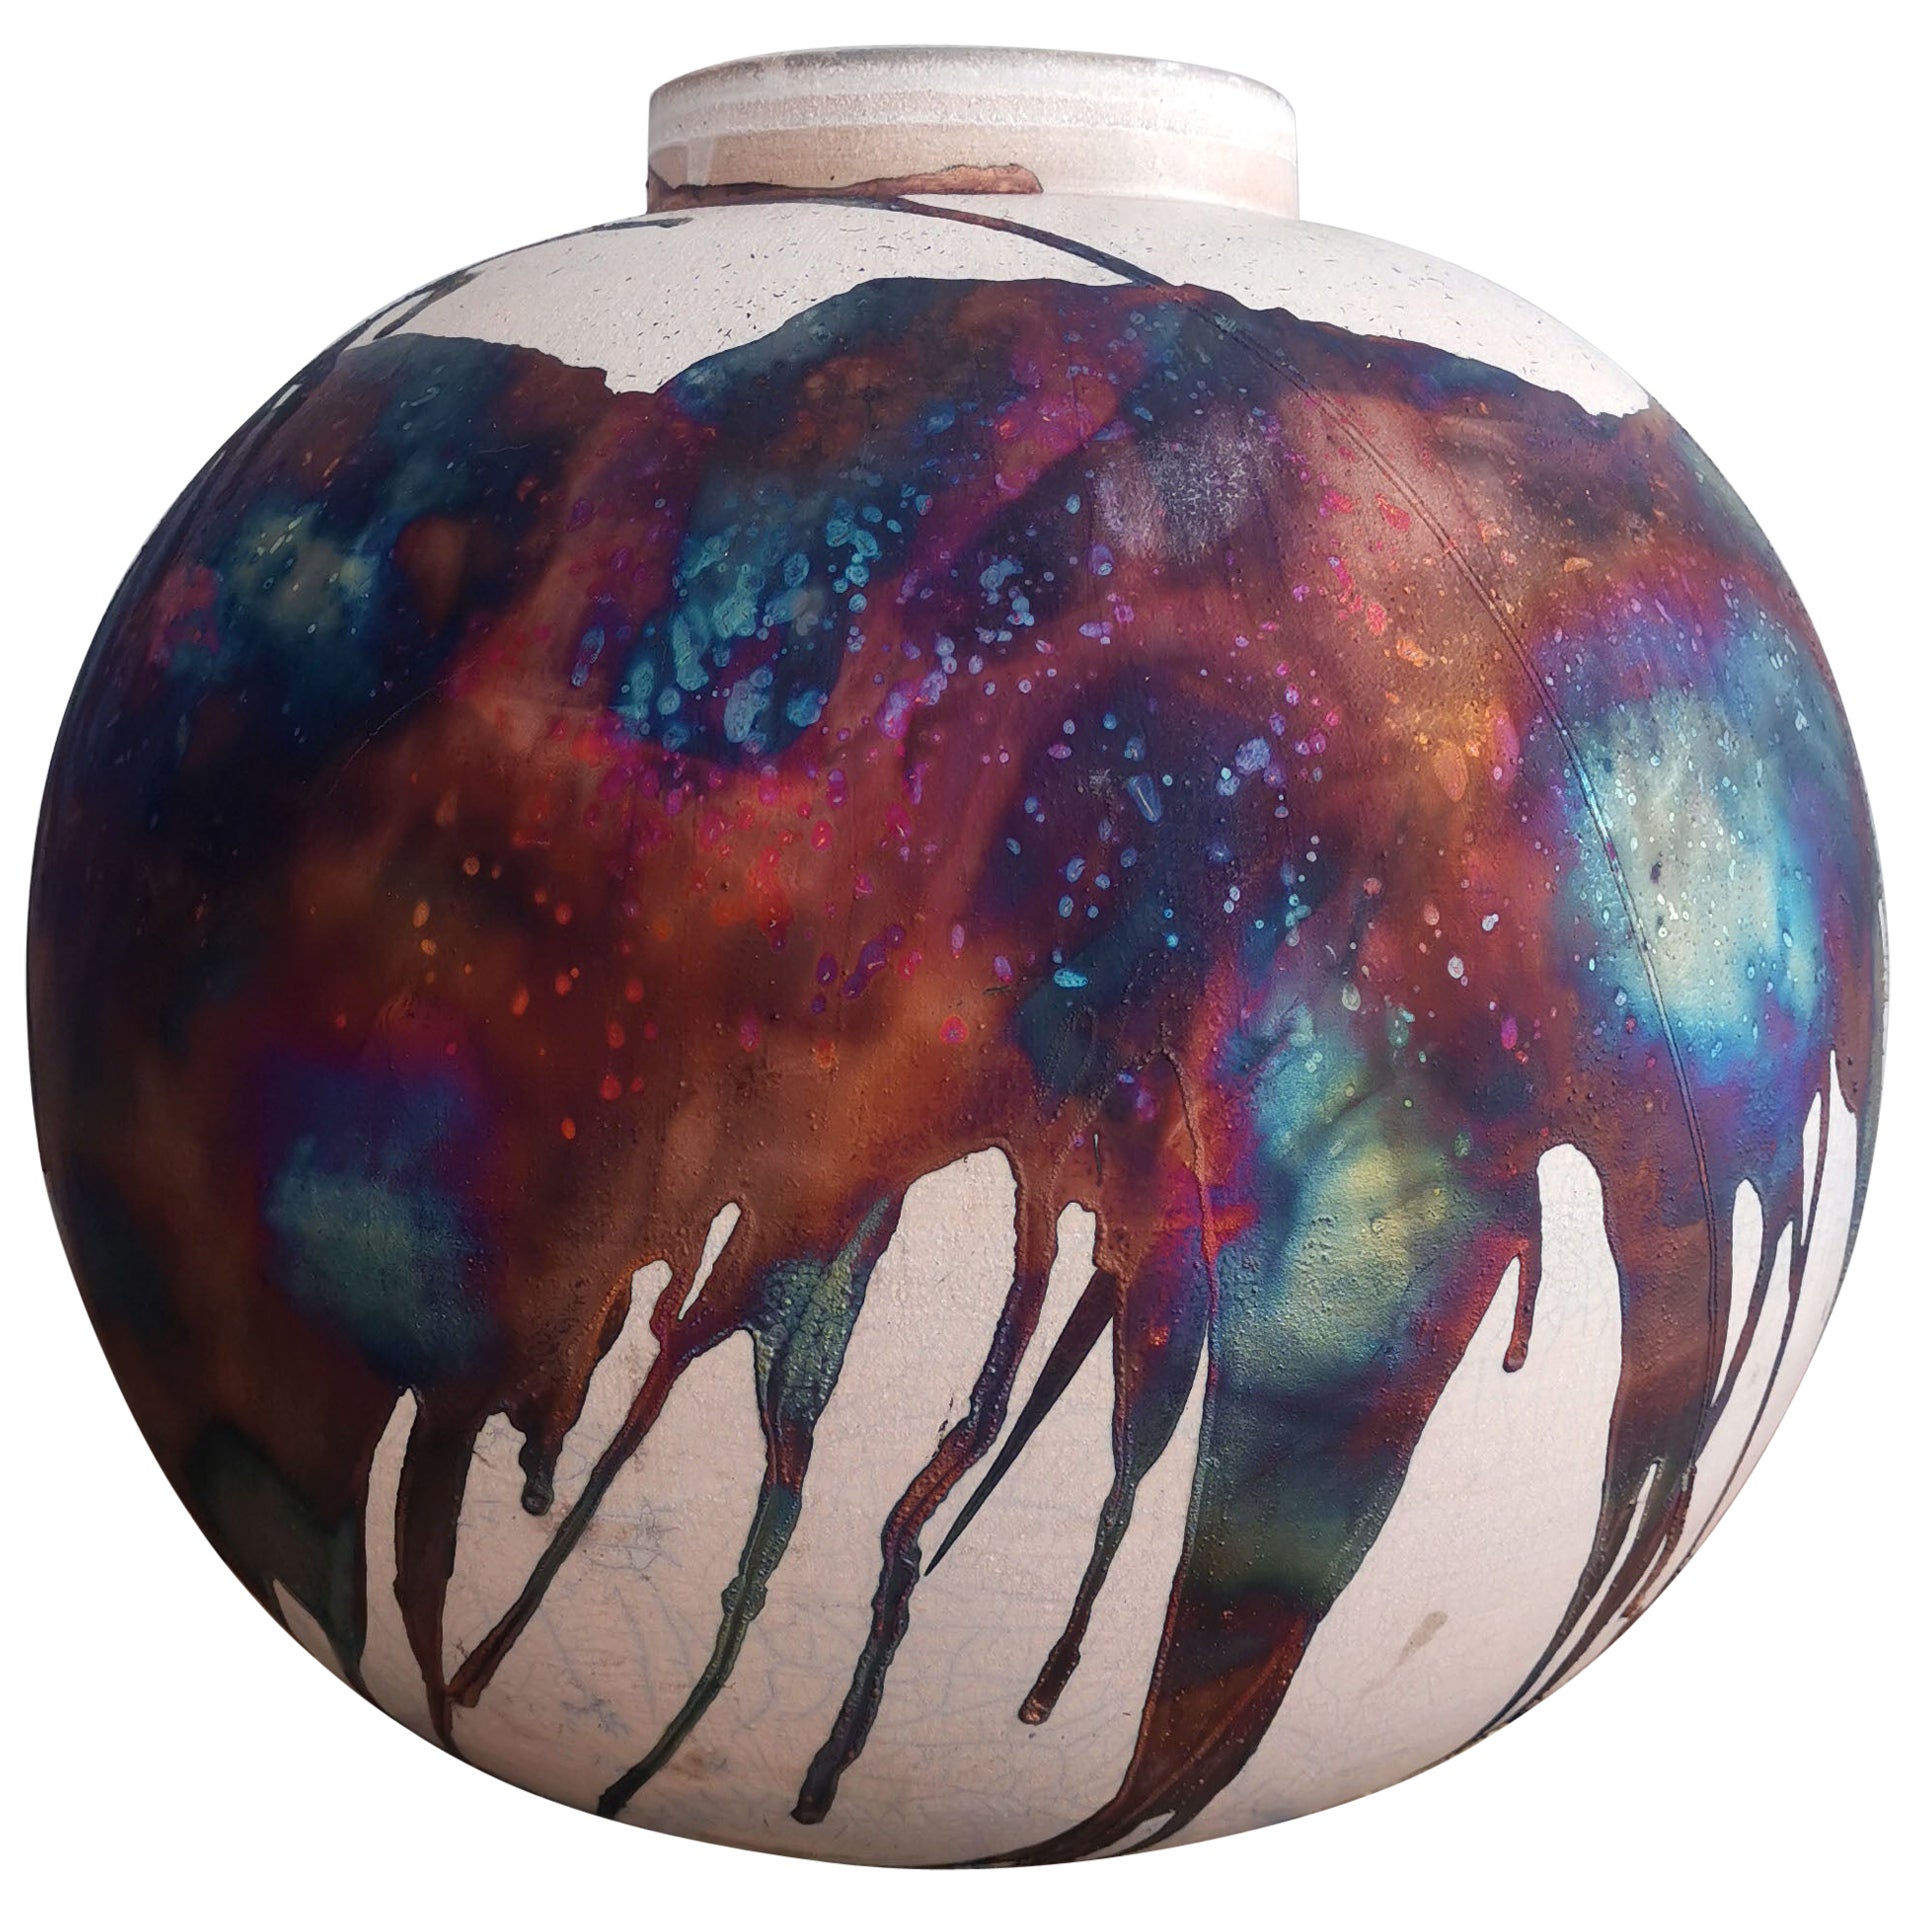 Raaquu Raku Fired Large Globe XL 13" Vase S/N0000652 Centerpiece Art Series For Sale